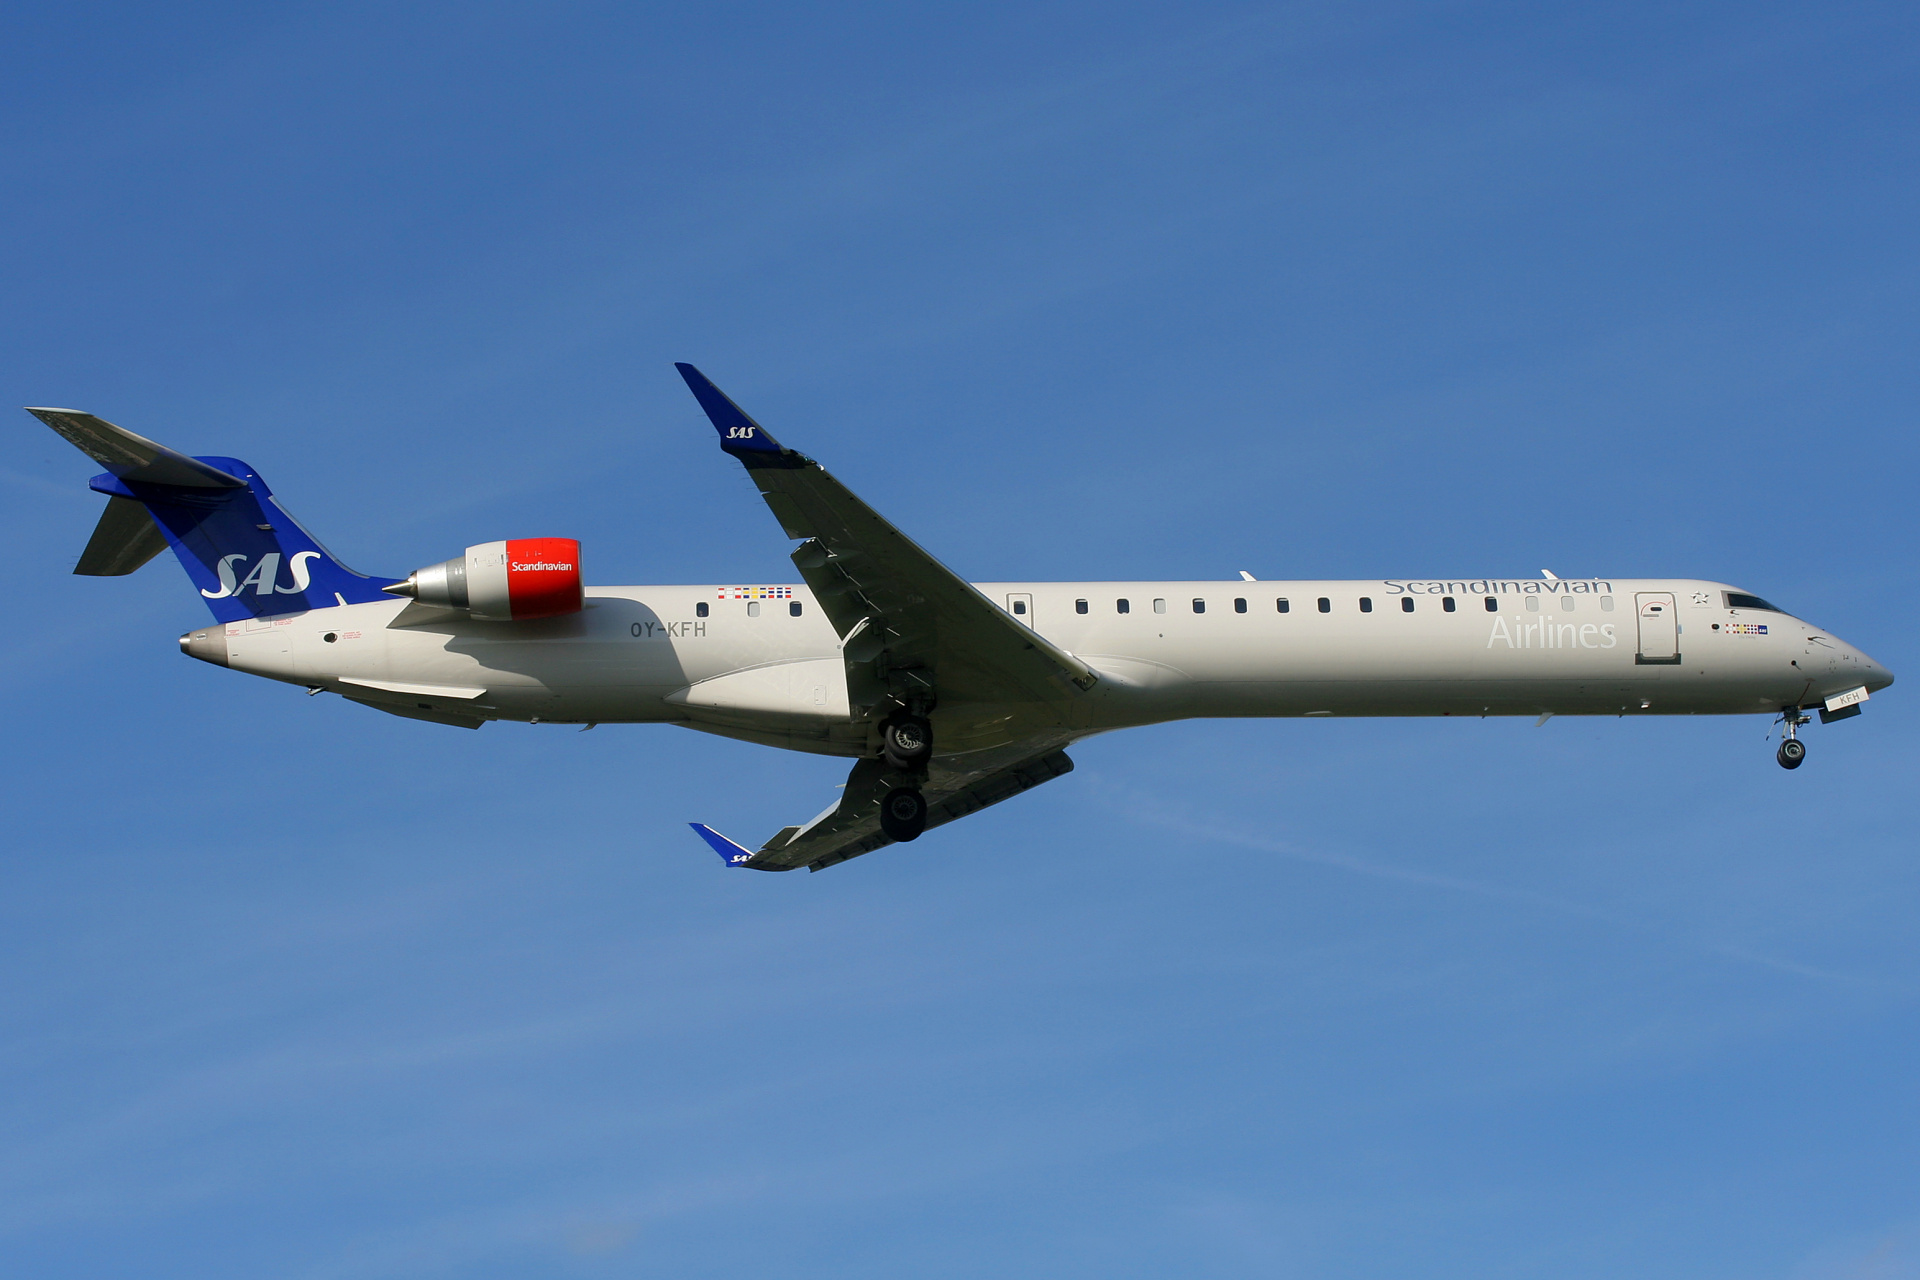 OY-KFH (Aircraft » EPWA Spotting » Mitsubishi Regional Jet » CRJ-900 » SAS Scandinavian Airlines)